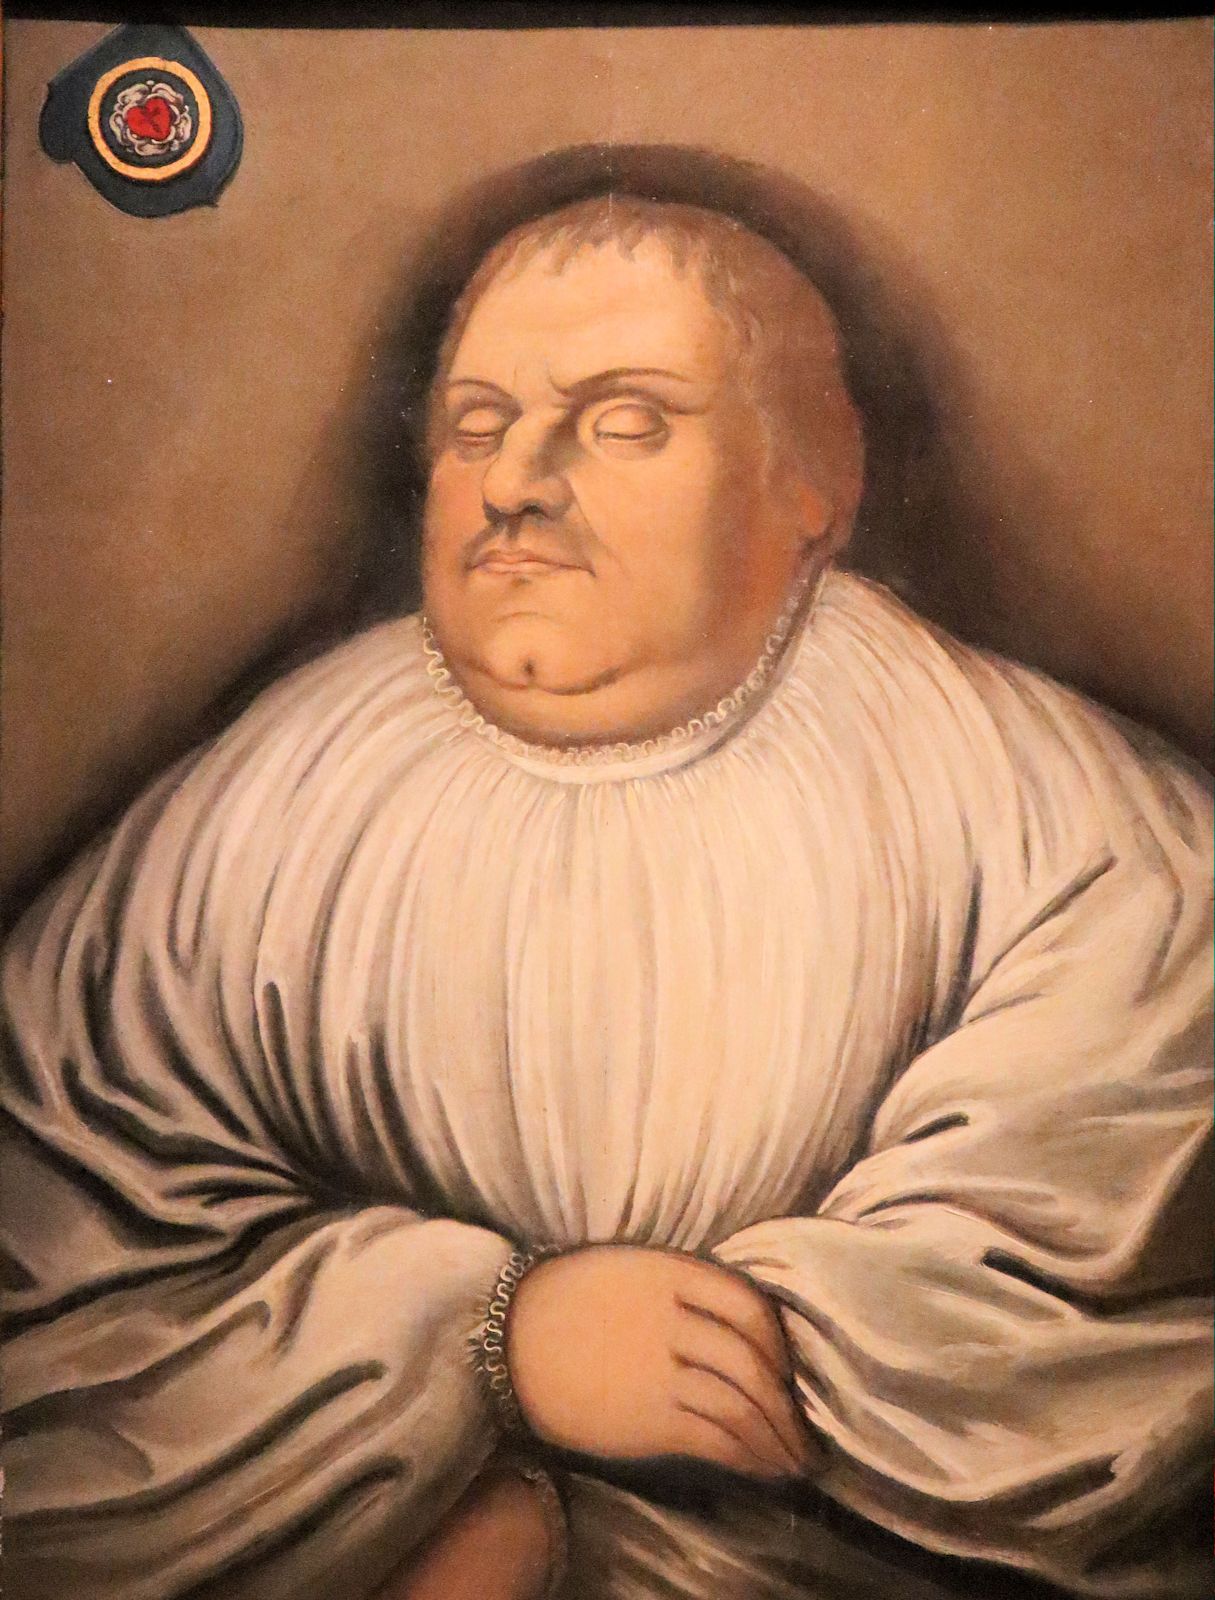 Totenbildnis, 1546, im Lutherhaus in Wittenberg